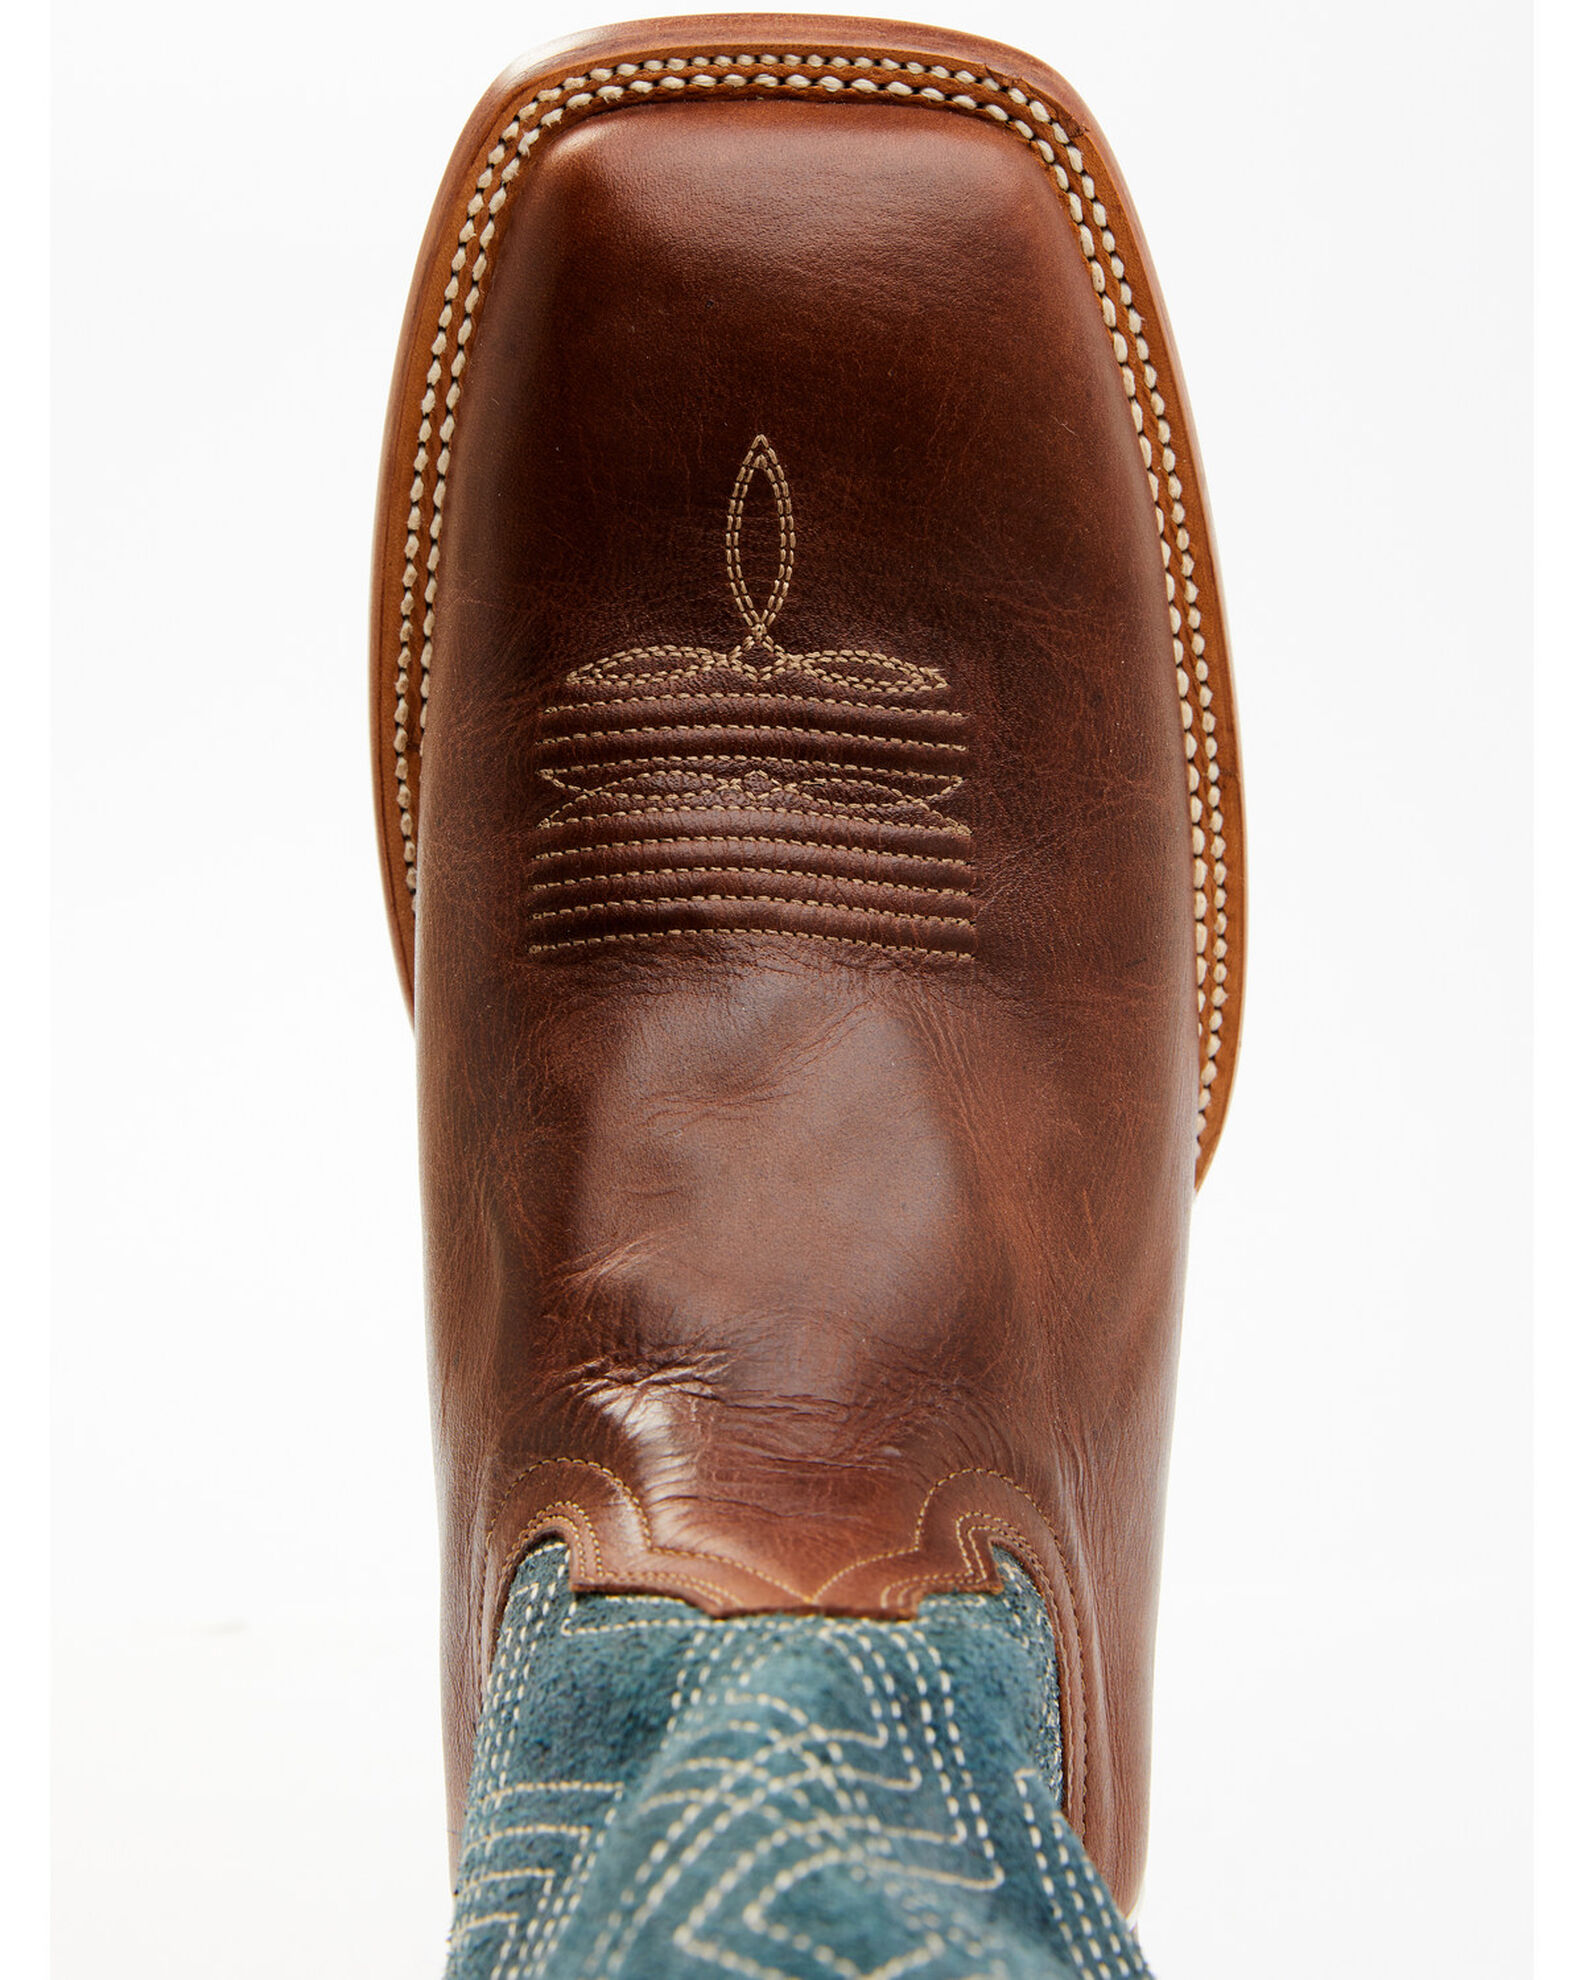 Cody James Men's Shasta Western Boots - Broad Square Toe